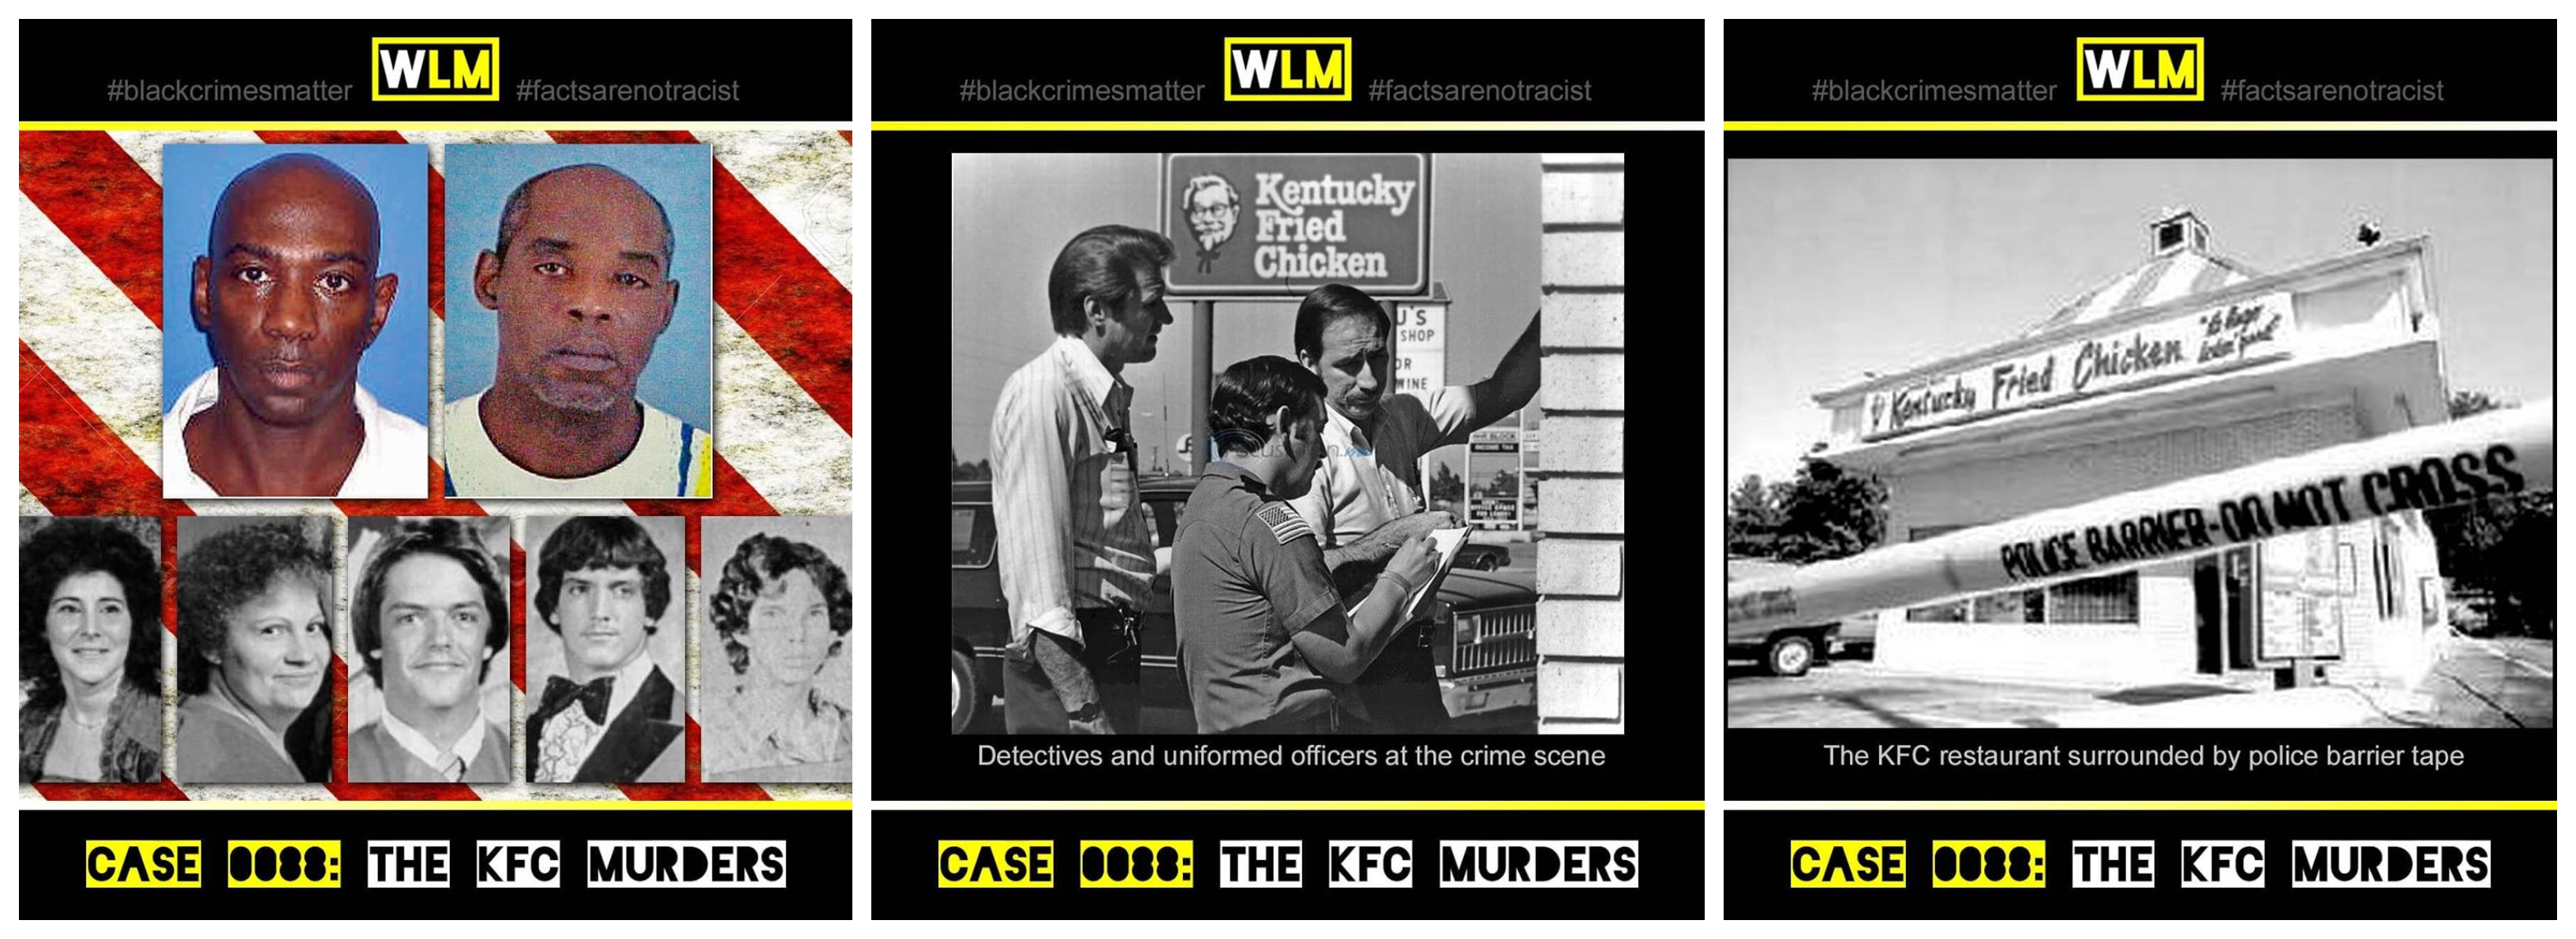 case-088-the-kfc-murders